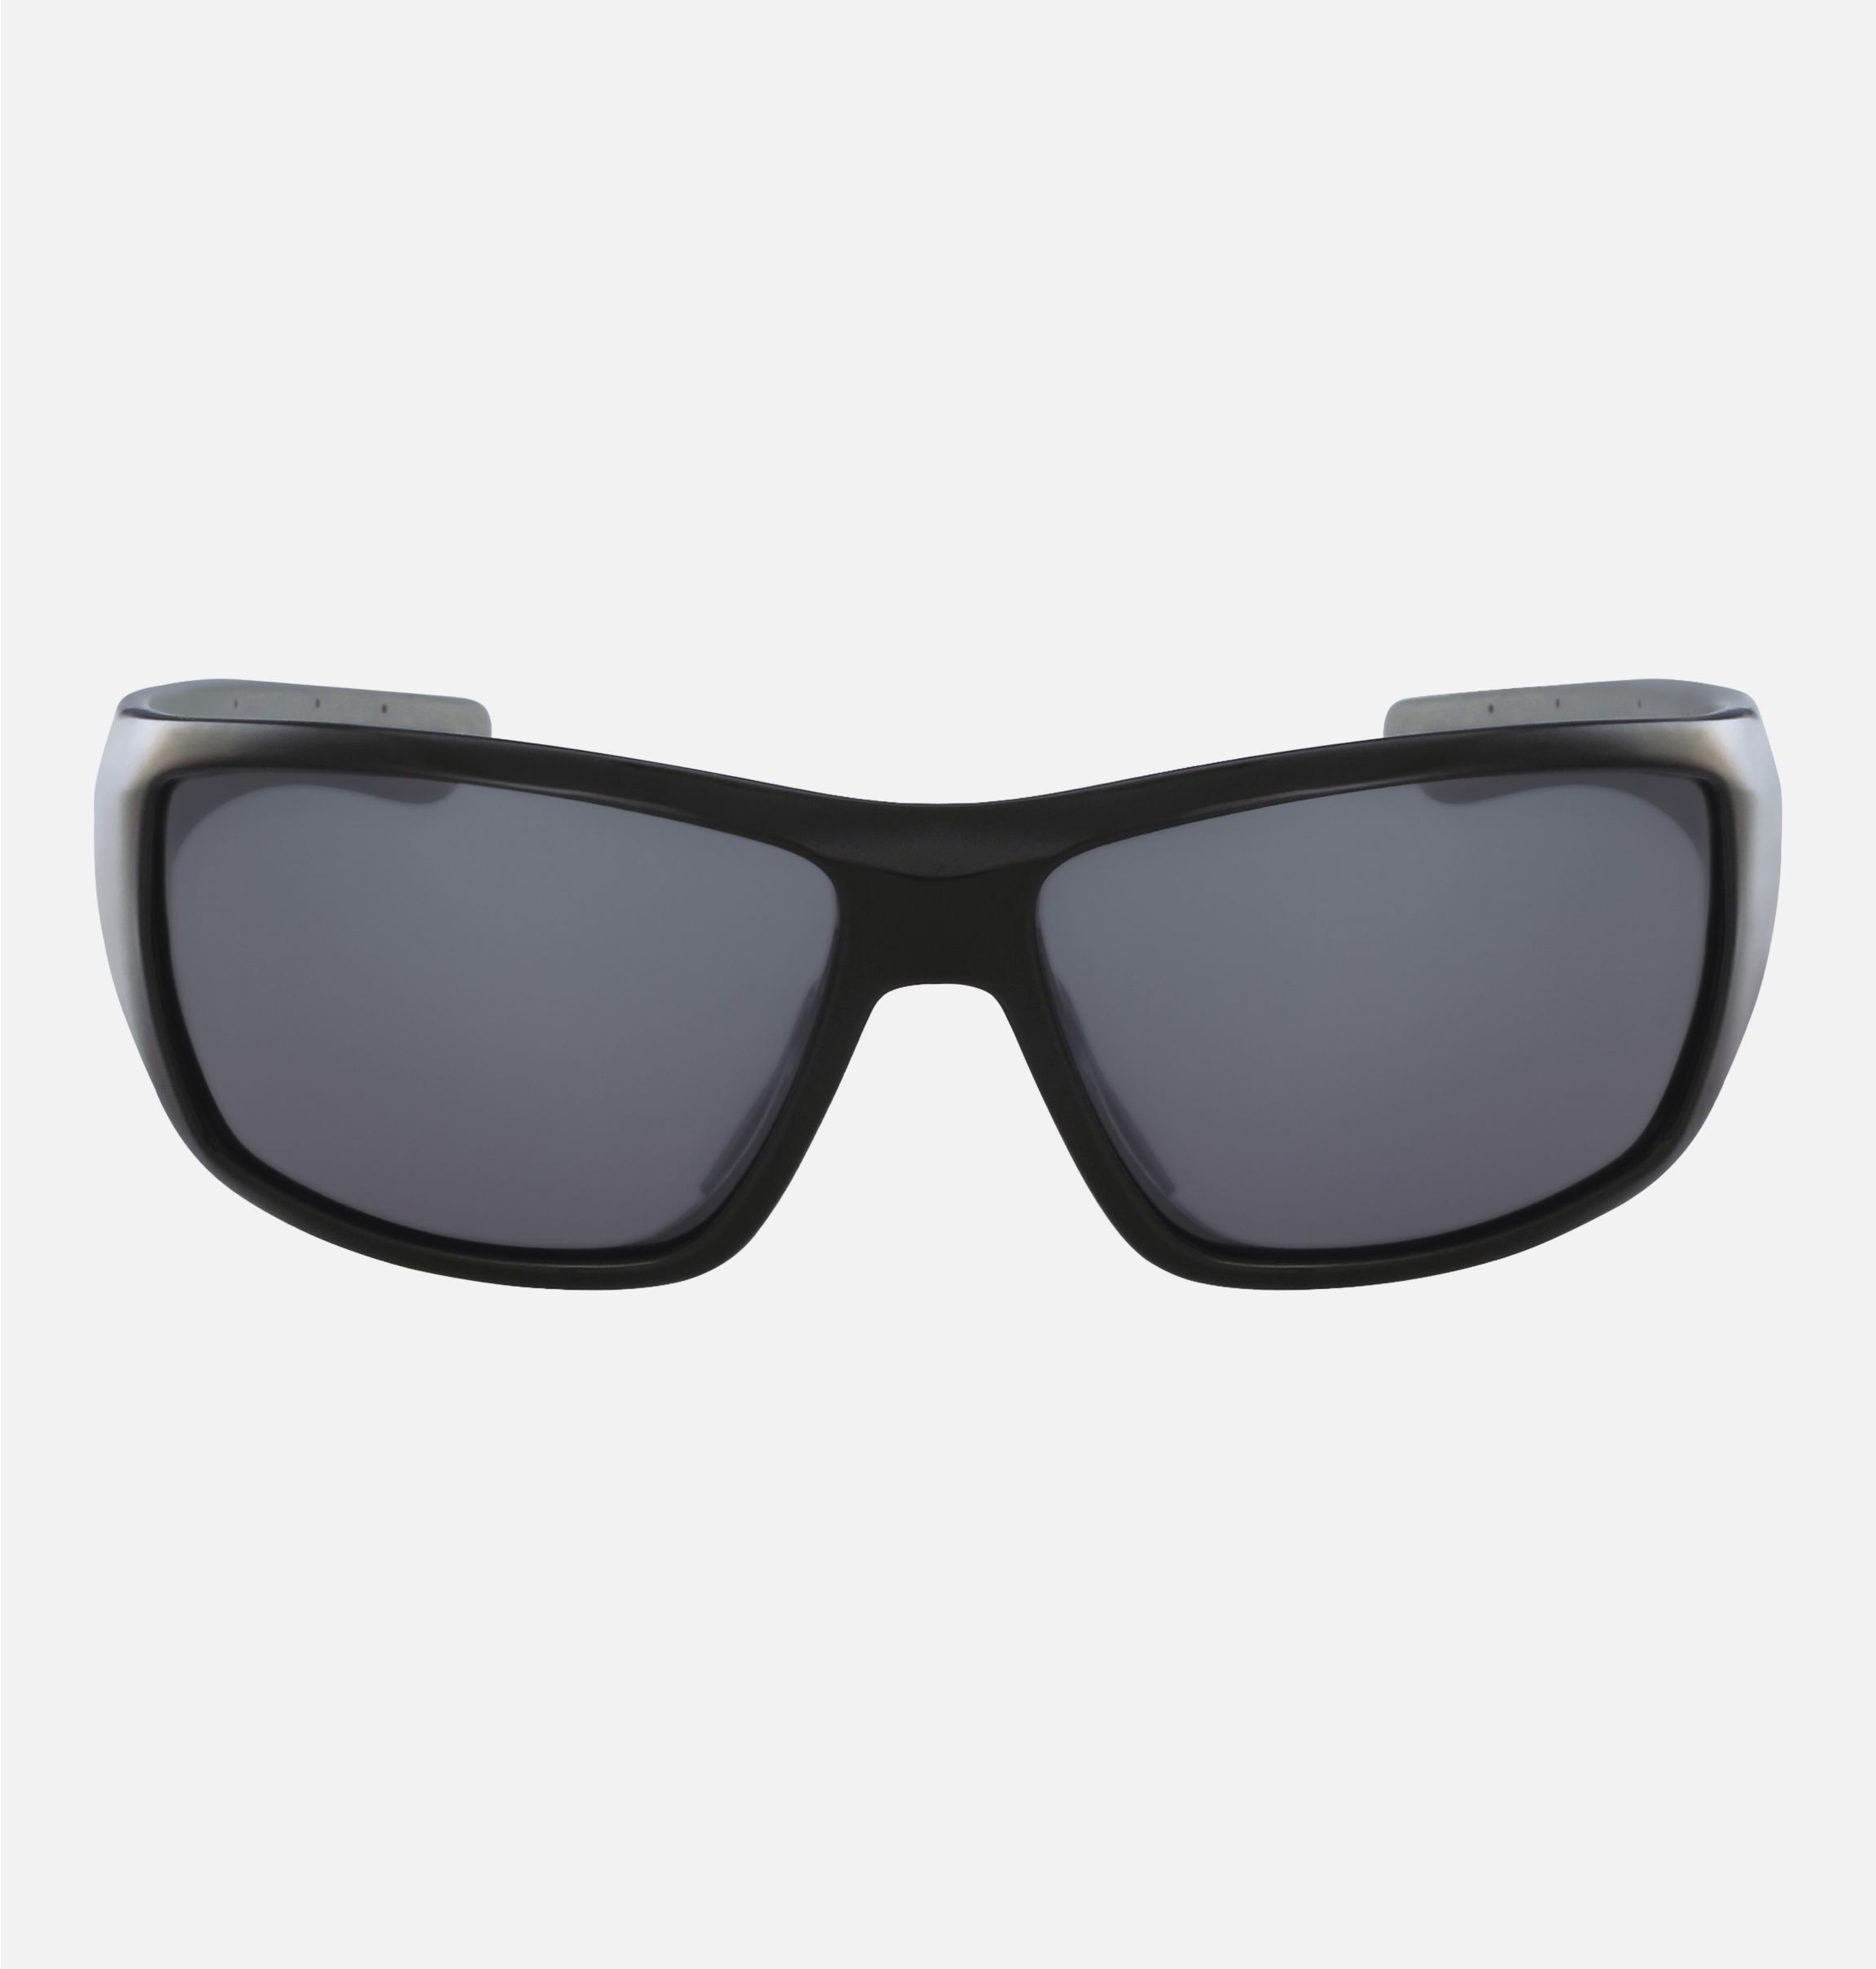 Columbia Burr Polarized Sunglasses, Men's, Tortoise/Green